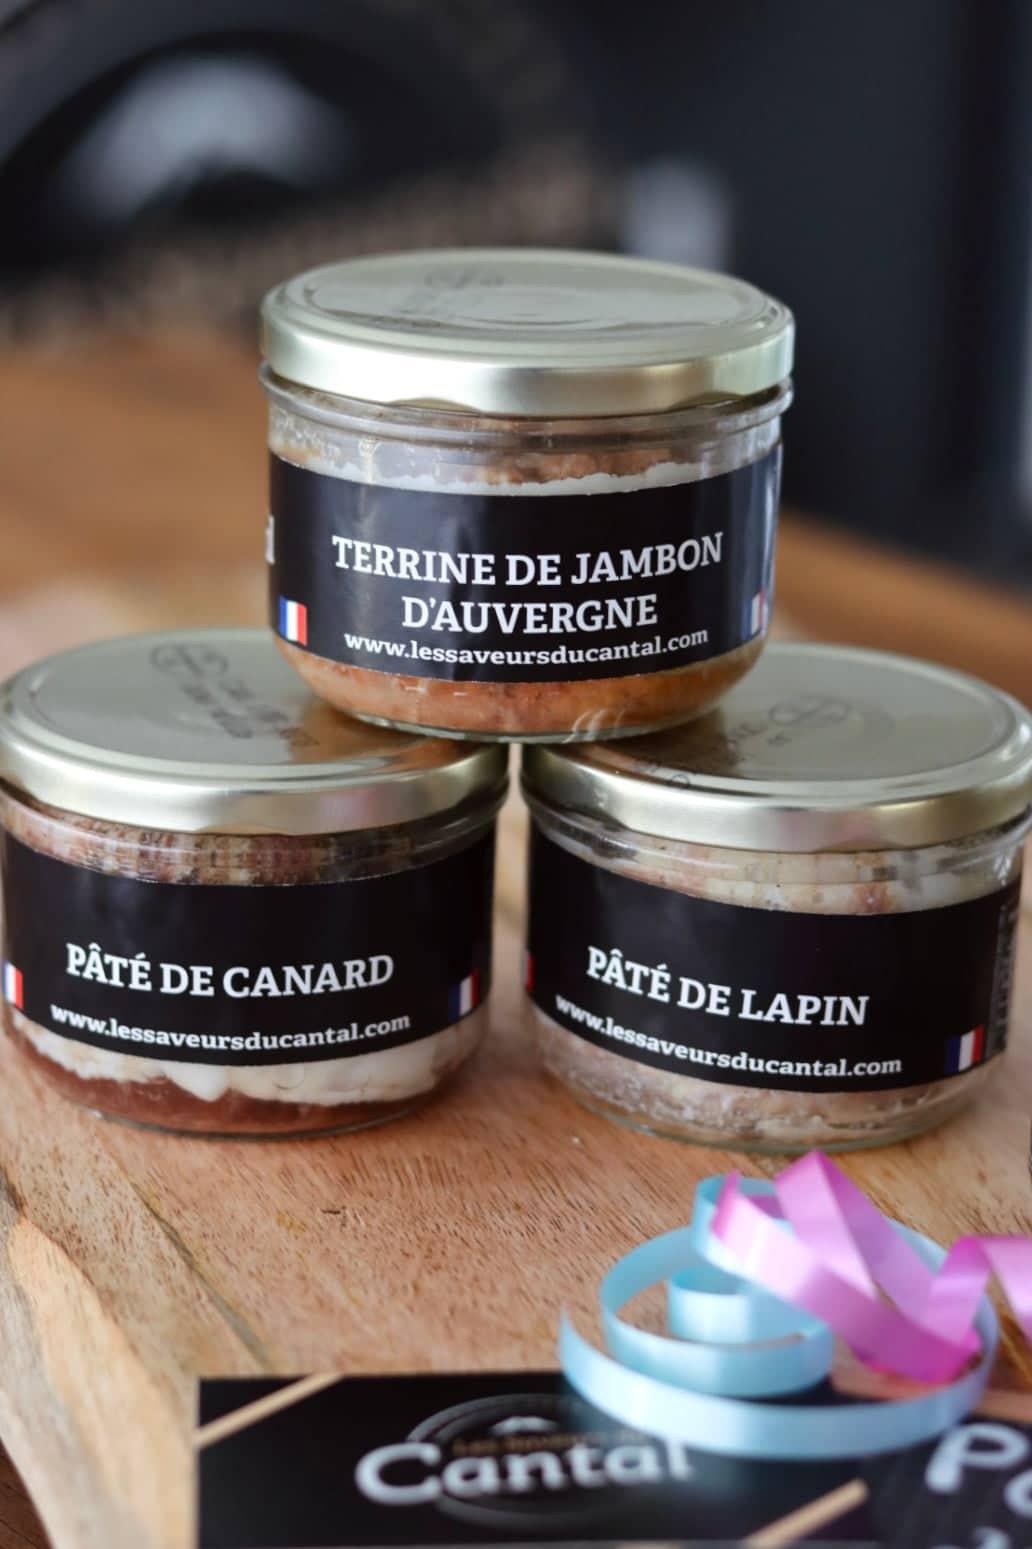 Pâtés and terrines - Les Charcuteries